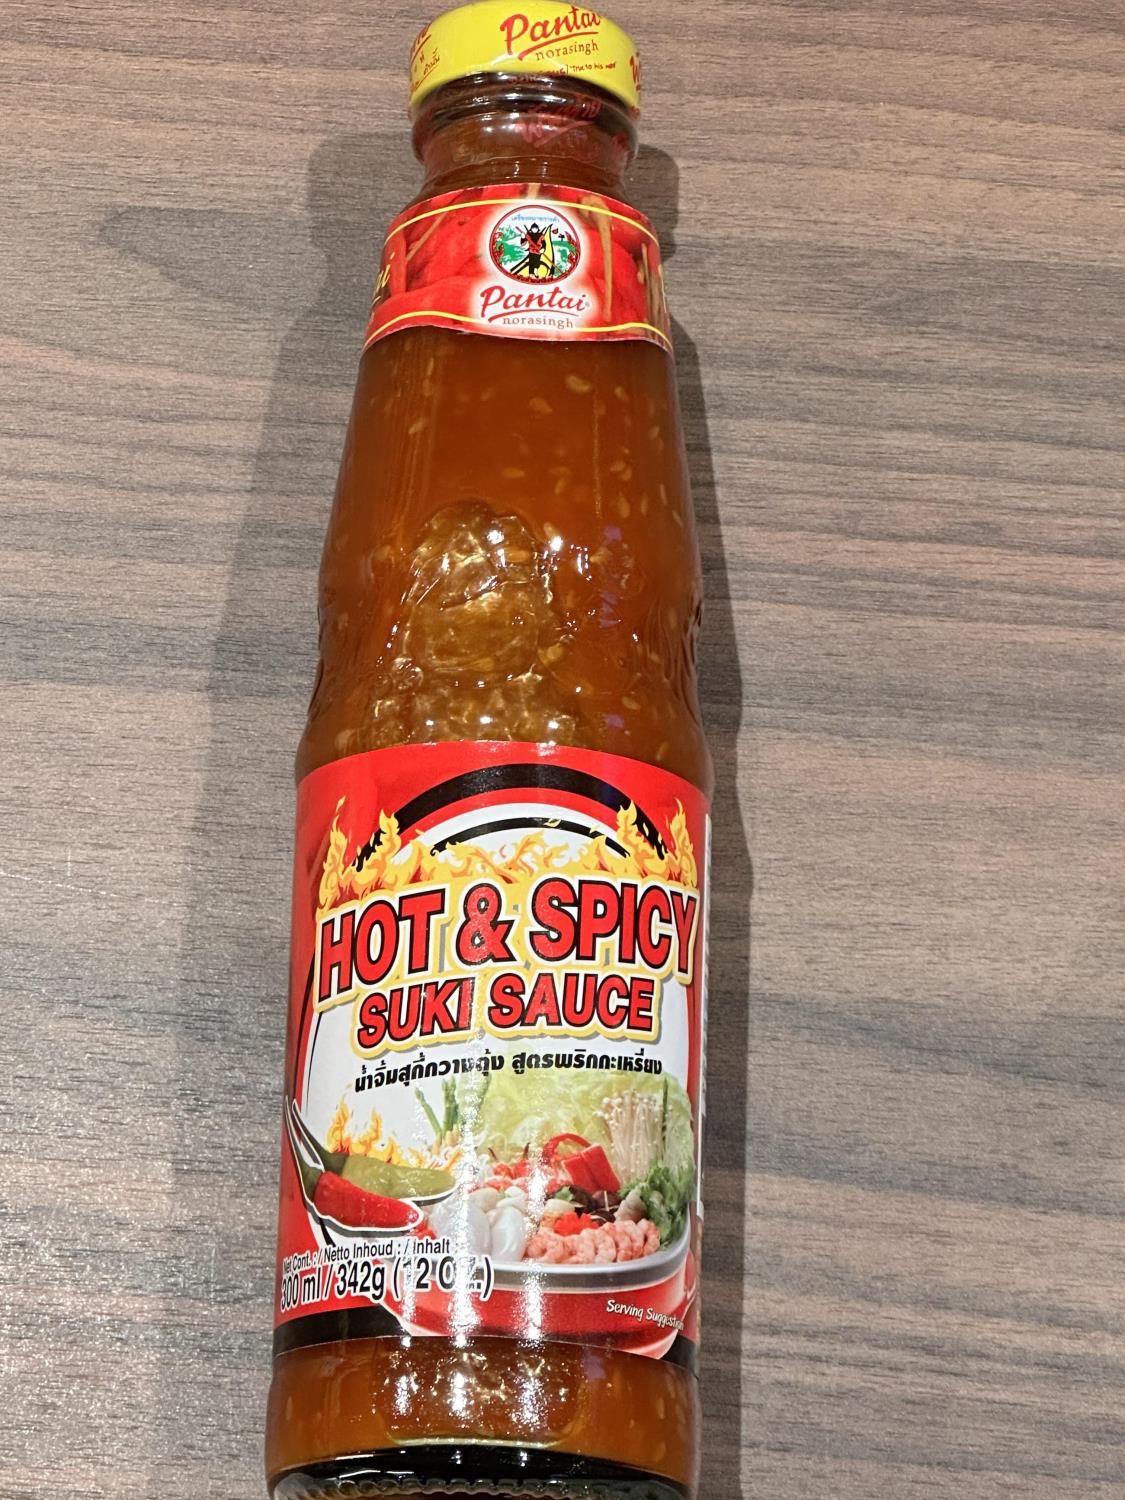 Hot & Spicy suki sauce